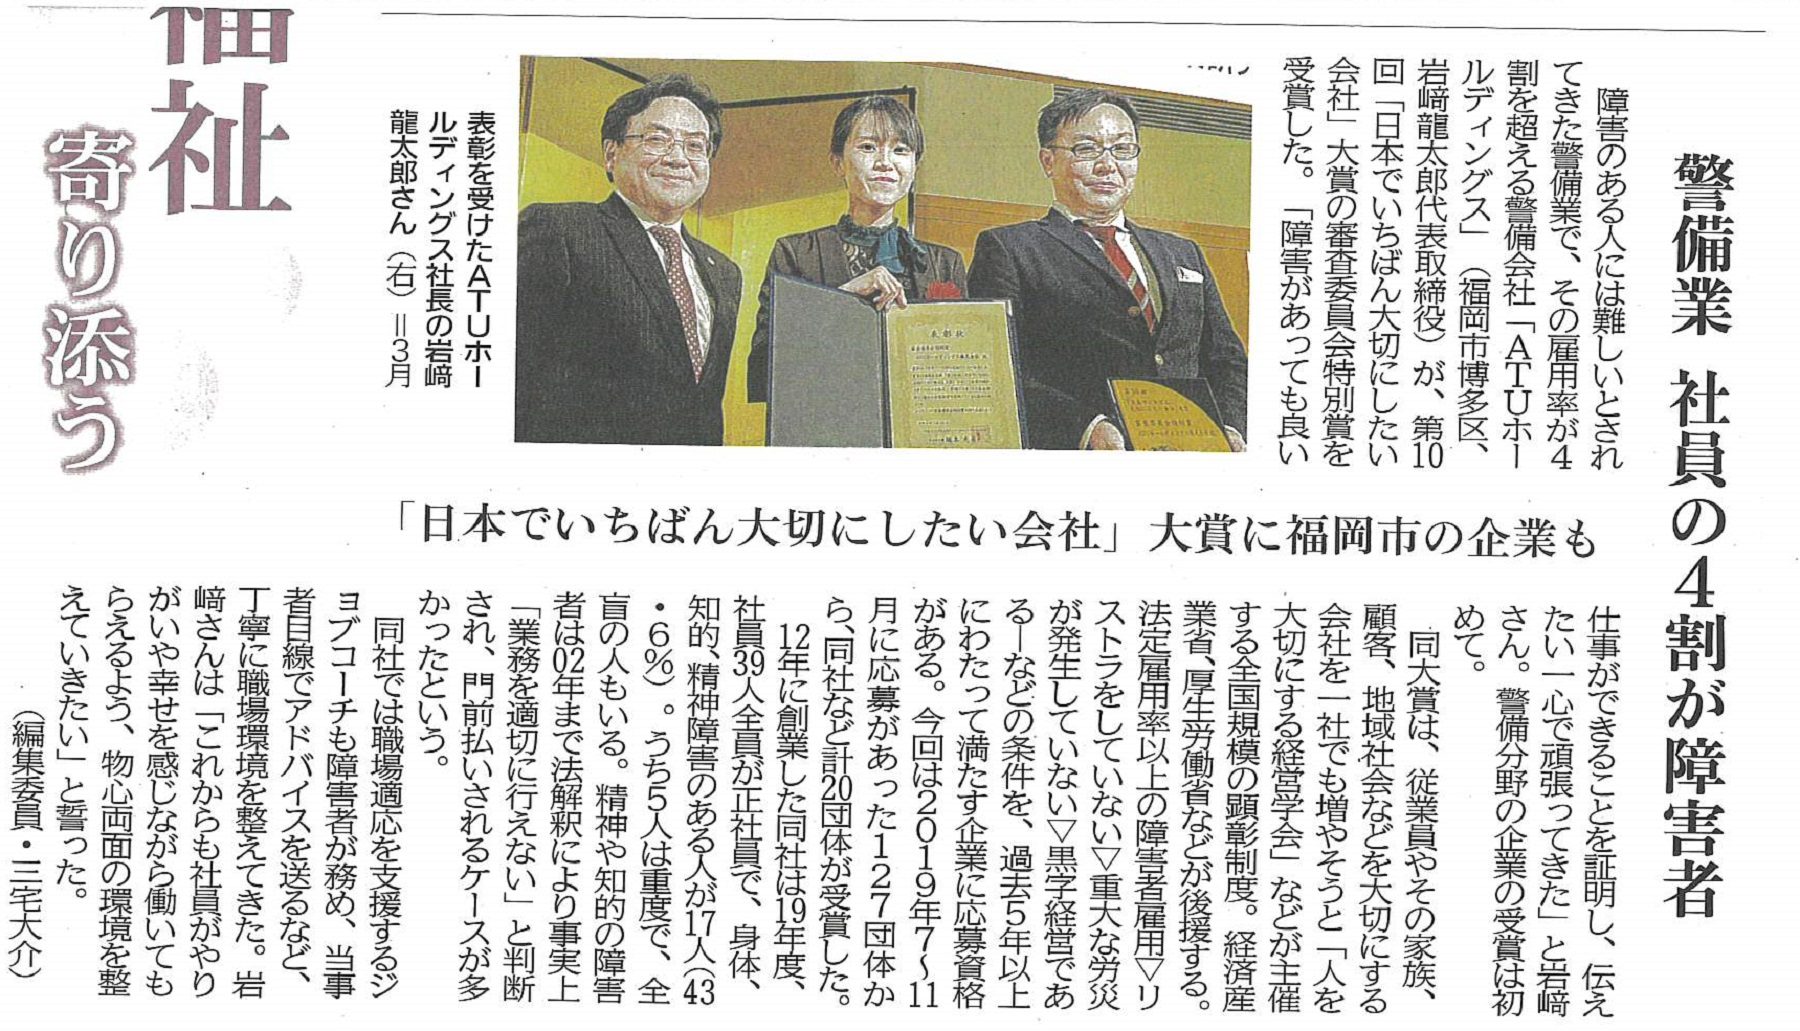 ATU,西日本新聞、日本でいちばん大切にしたい会社